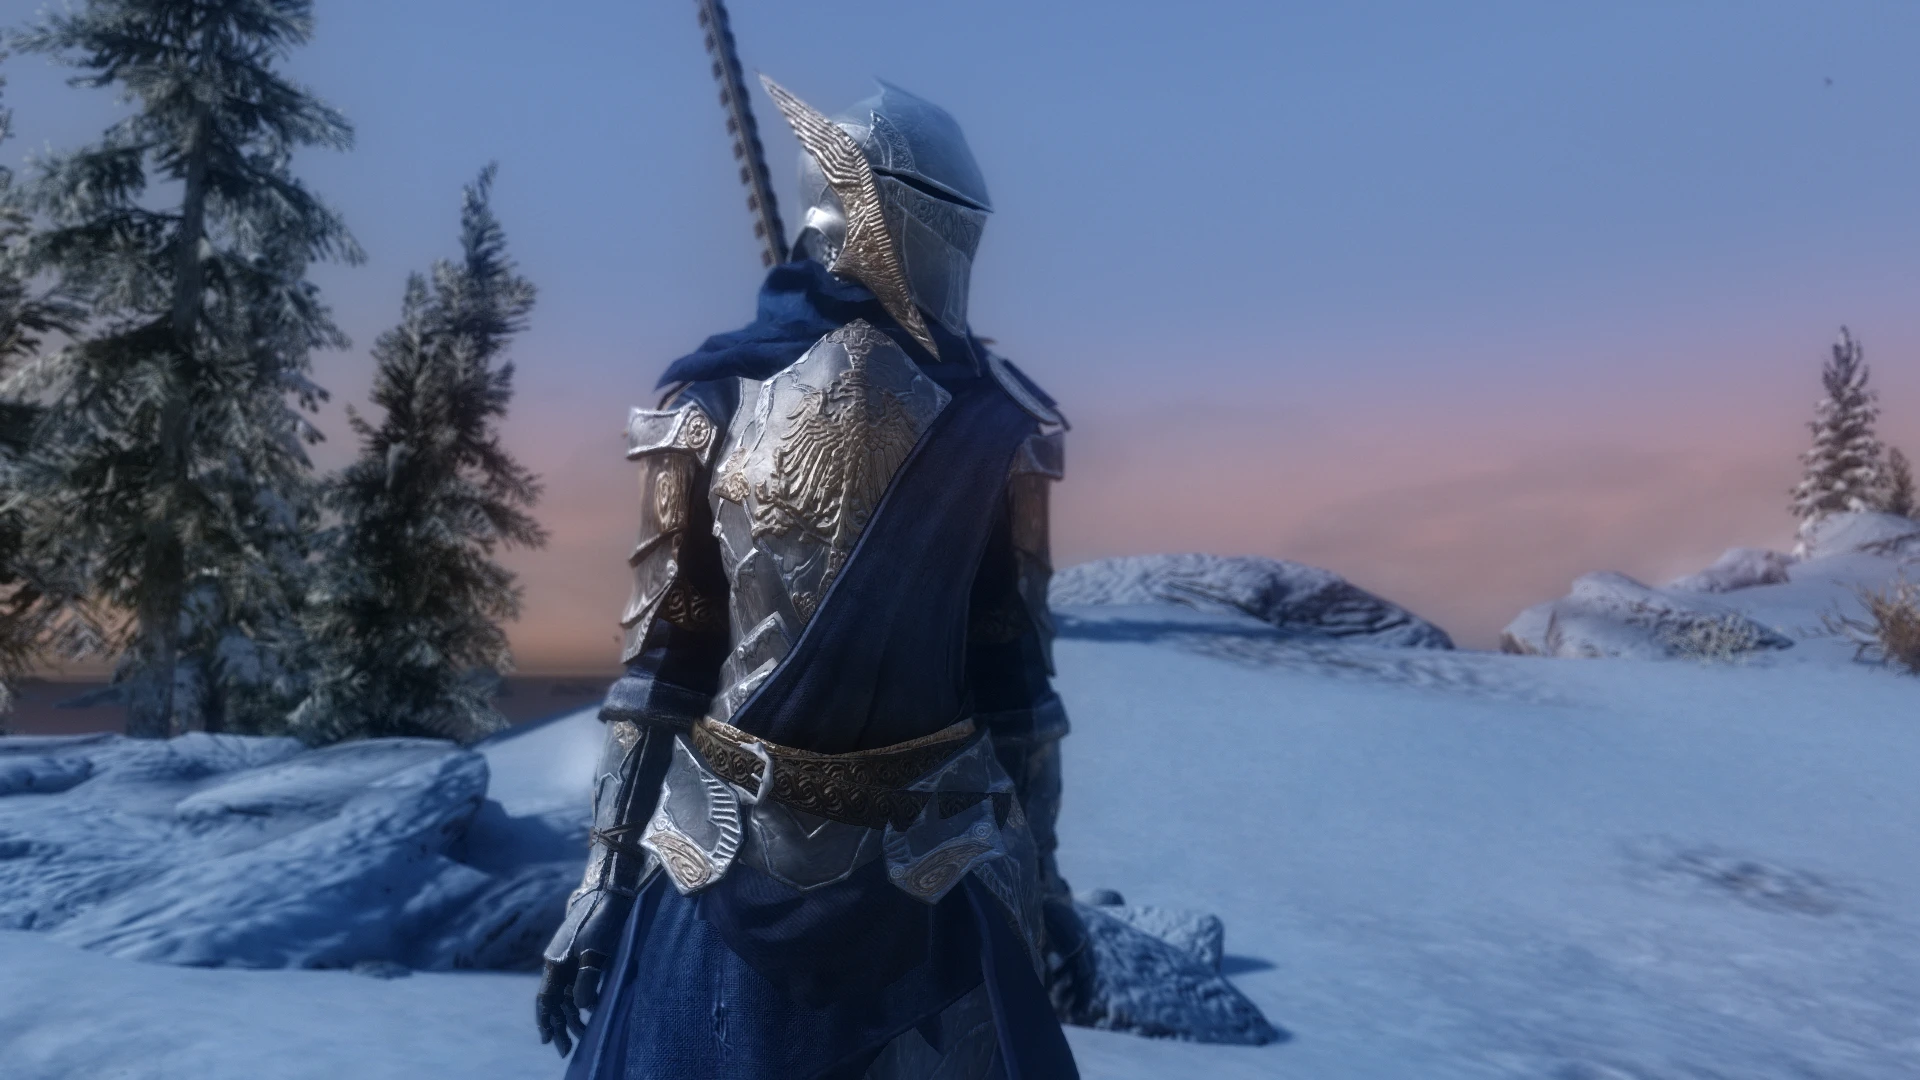 Resplendent Armor and Greatsword at Skyrim Nexus - Mods and Community